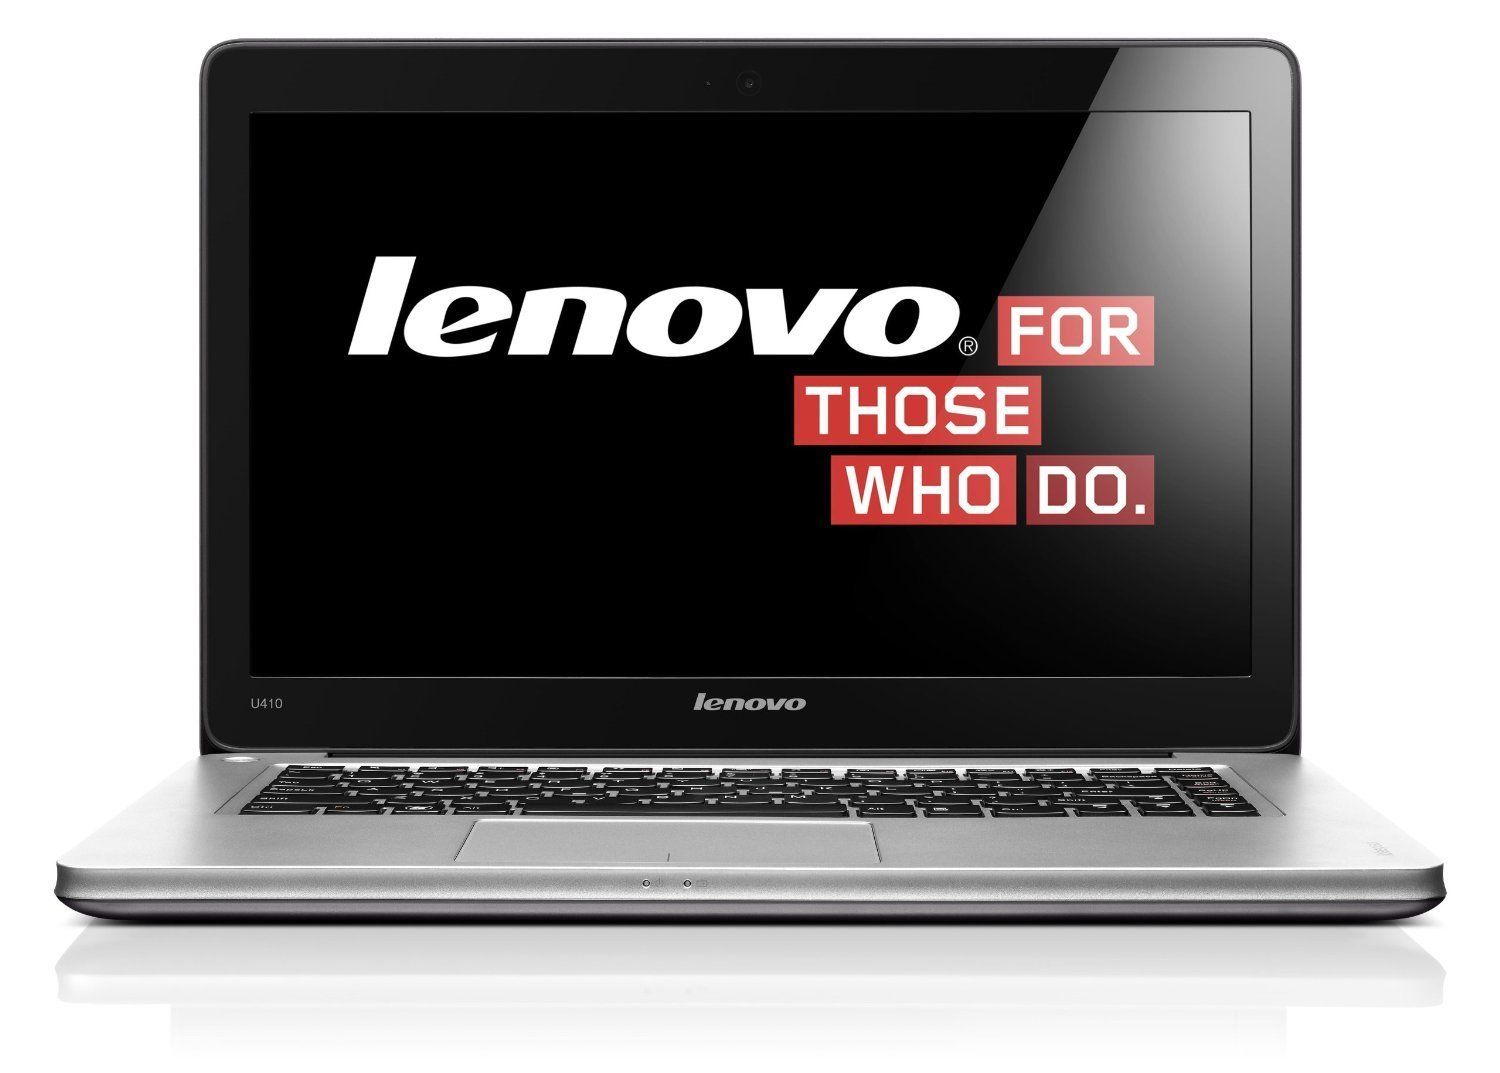 Lenovo Idea Pad U410 .jpg